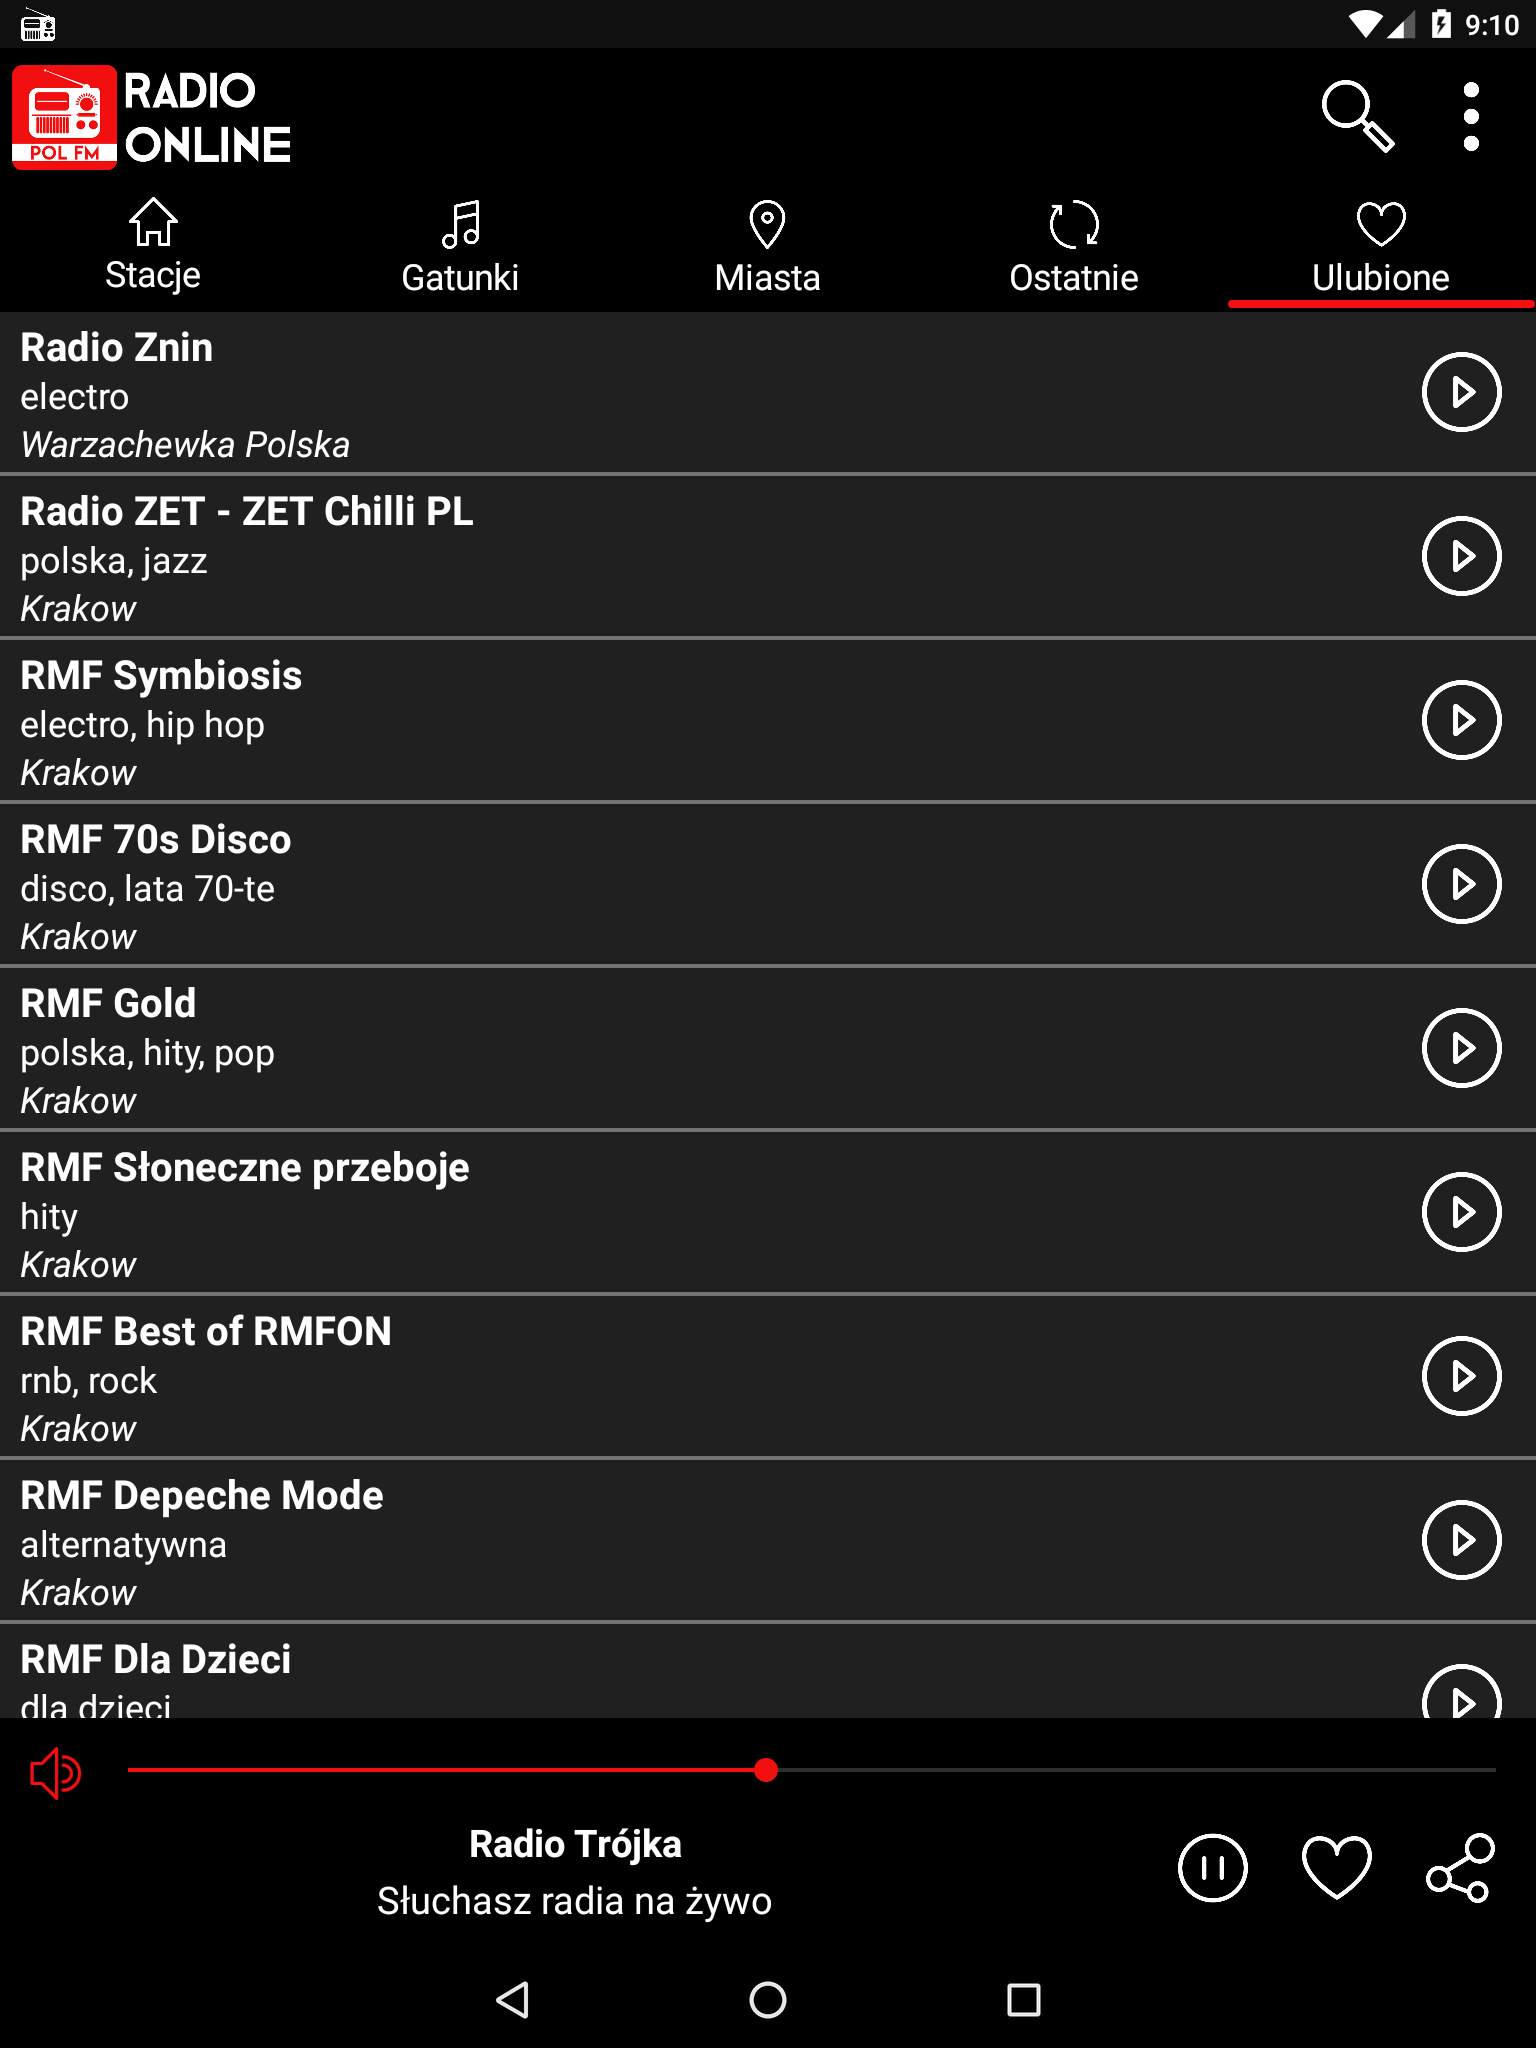 Radio Online Radio Internetowe APK 1.1.8 for Android – Download Radio  Online Radio Internetowe APK Latest Version from APKFab.com